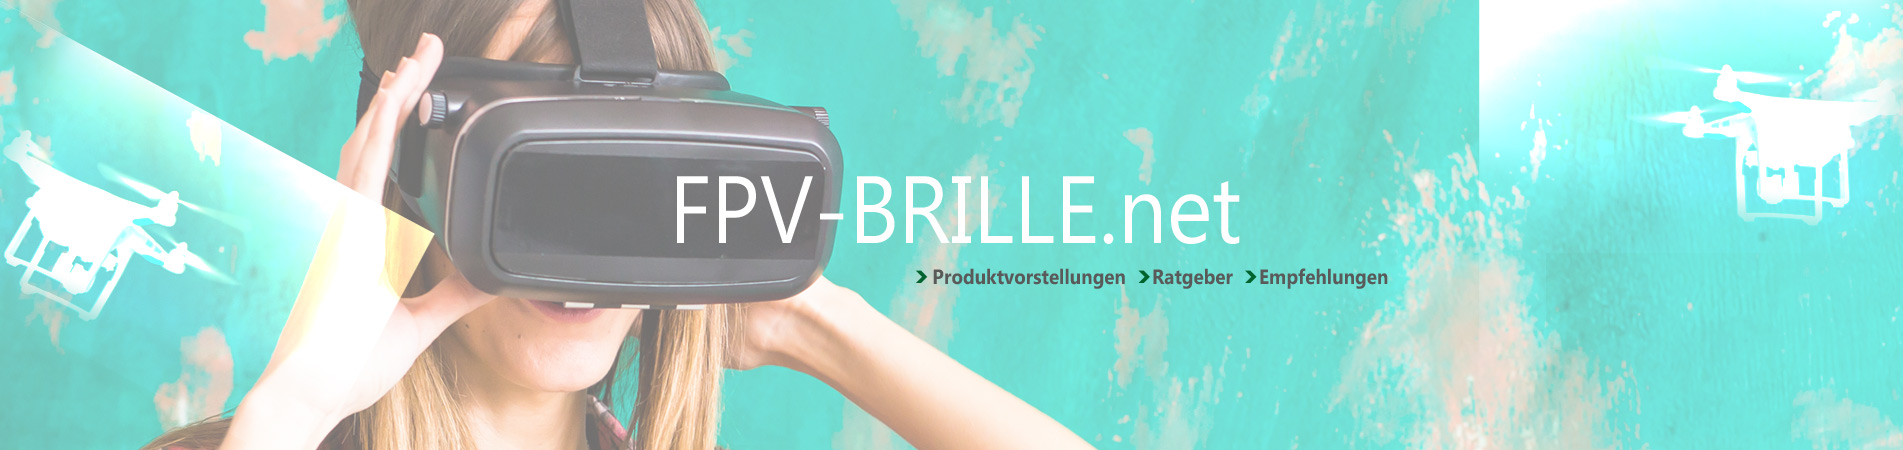 FPV-Brille.net